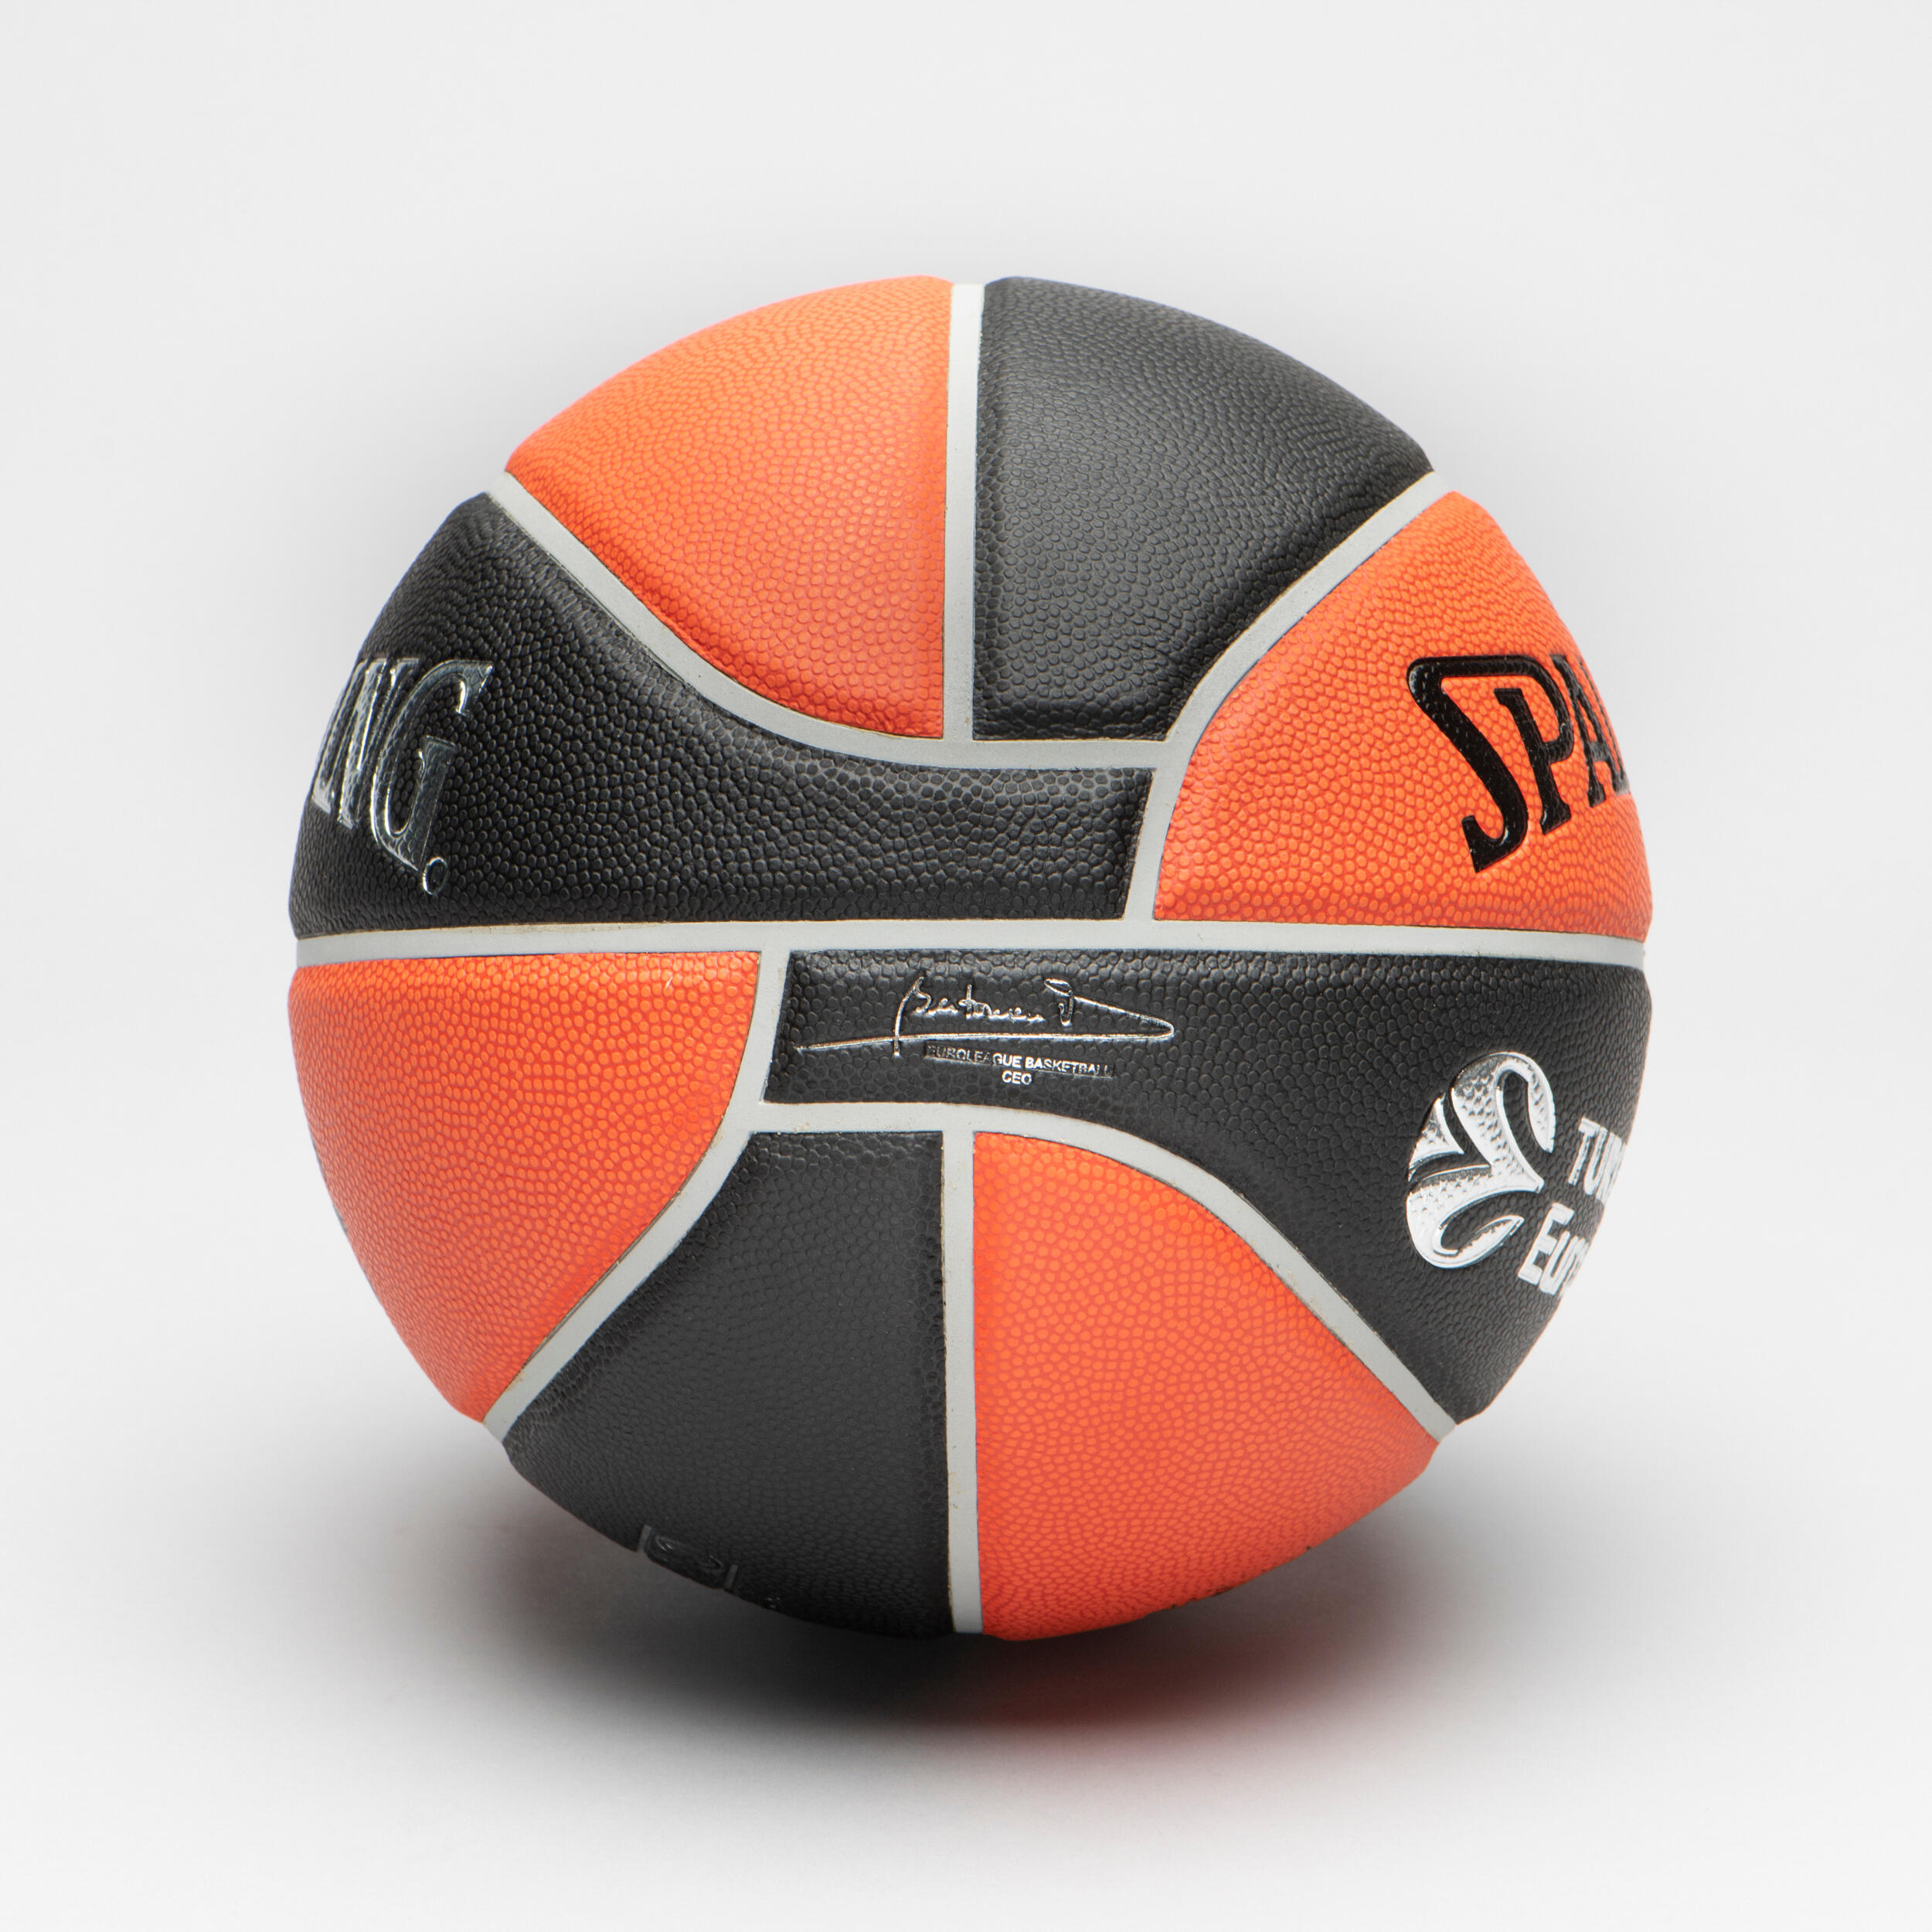 Size 7 Basketball 7 TF1000 Euroleague - Orange/Black 3/8